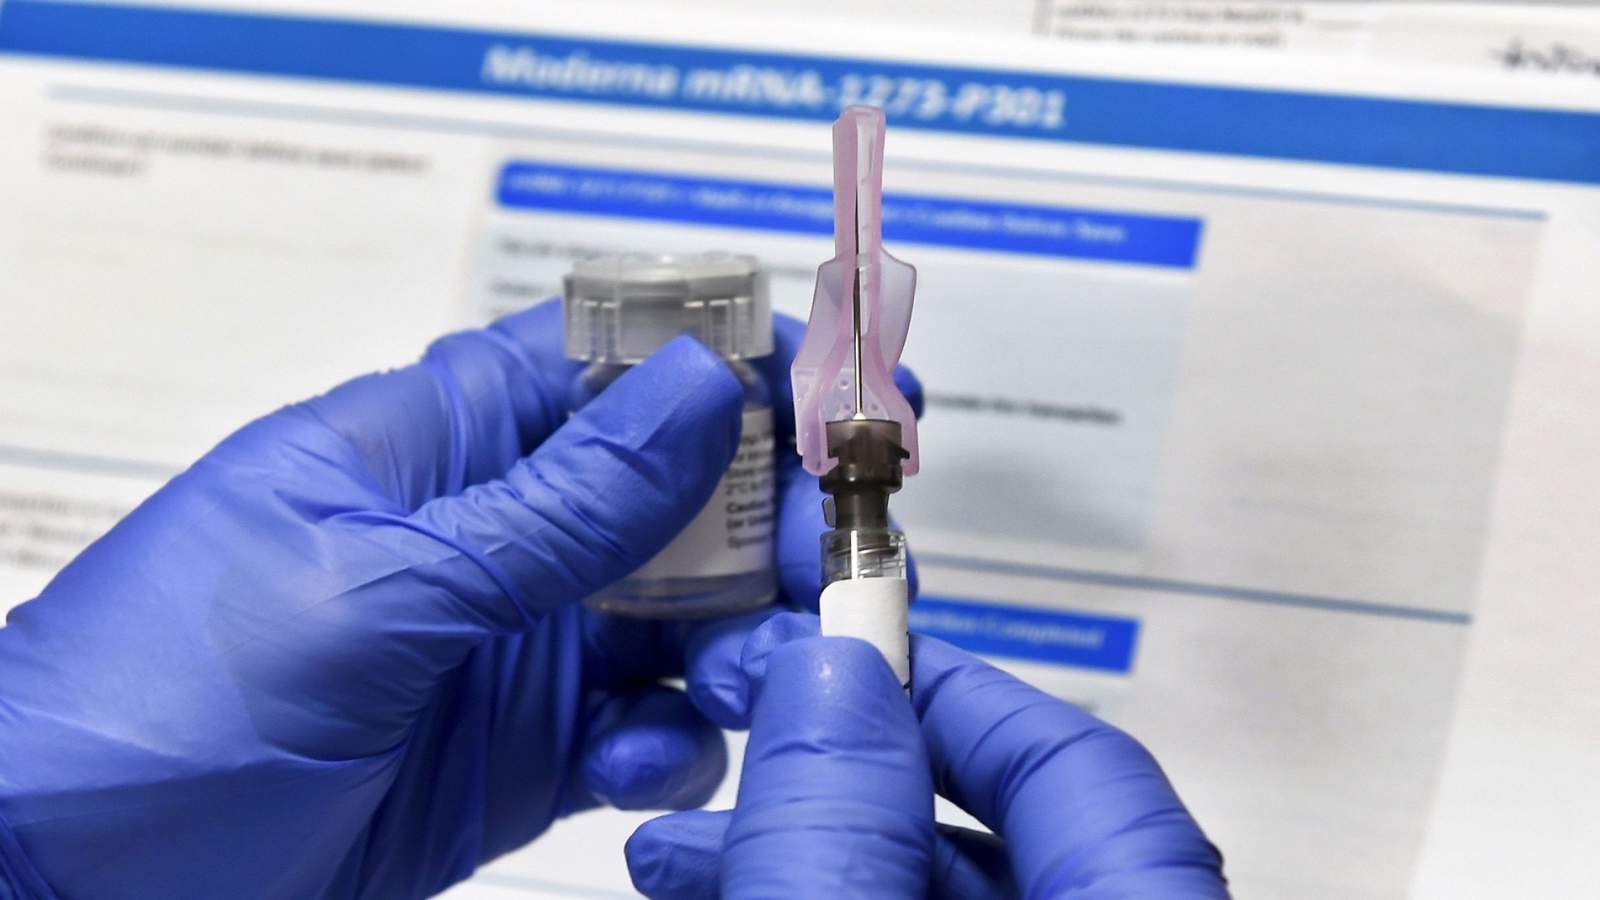 FDA advisory panel recommends approval of Pfizer coronavirus vaccine